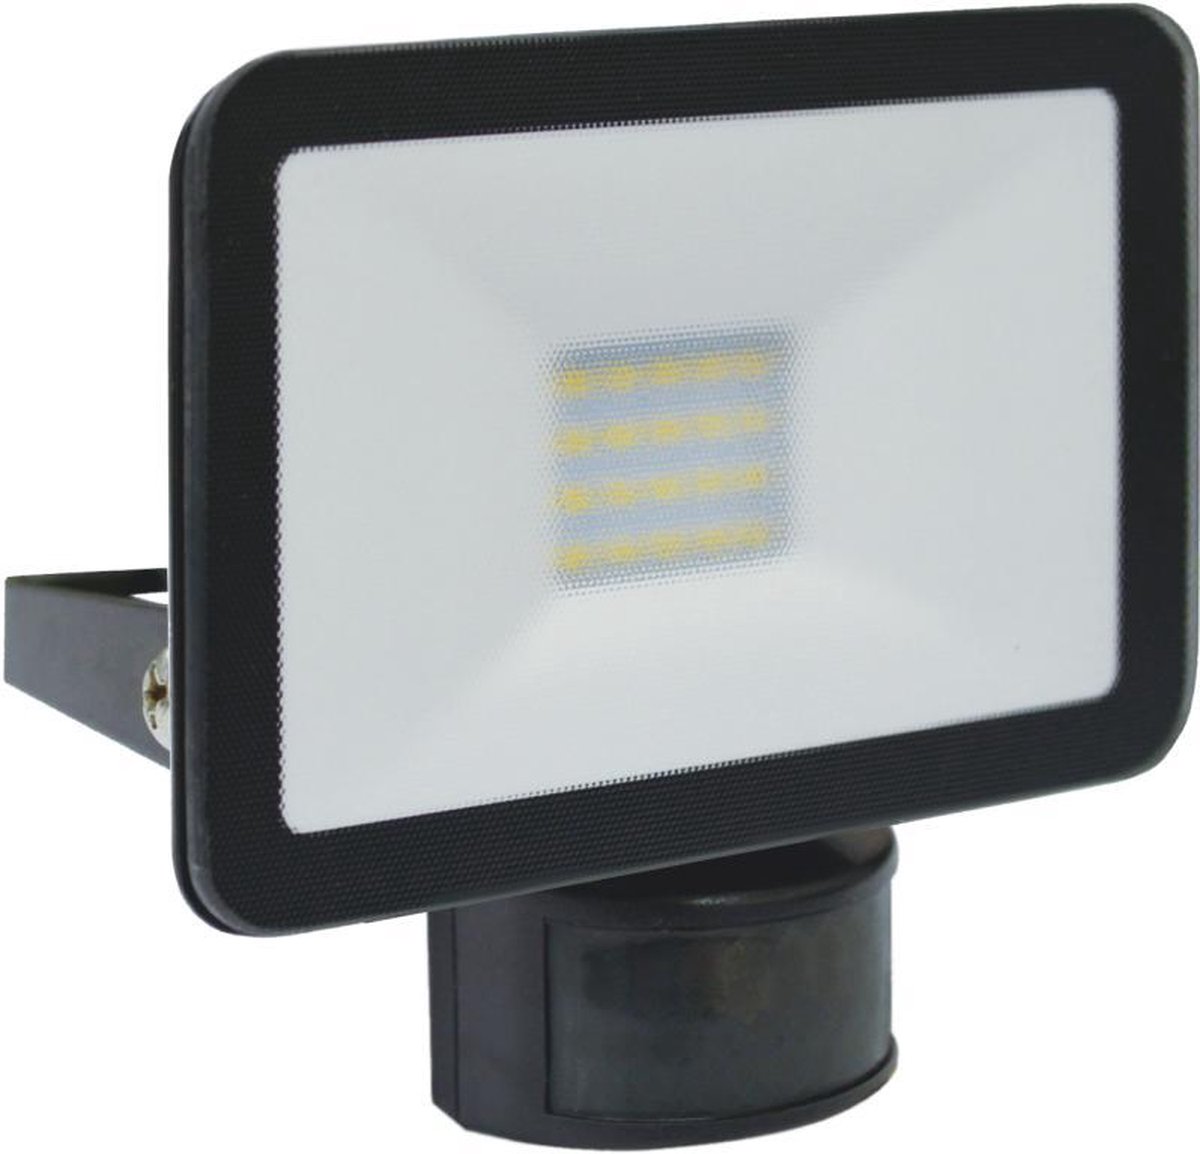 ELRO LF5010P LED Buitenlamp met Bewegingssensor Slim Design - 10W / 900lm - Zwart - ELRO